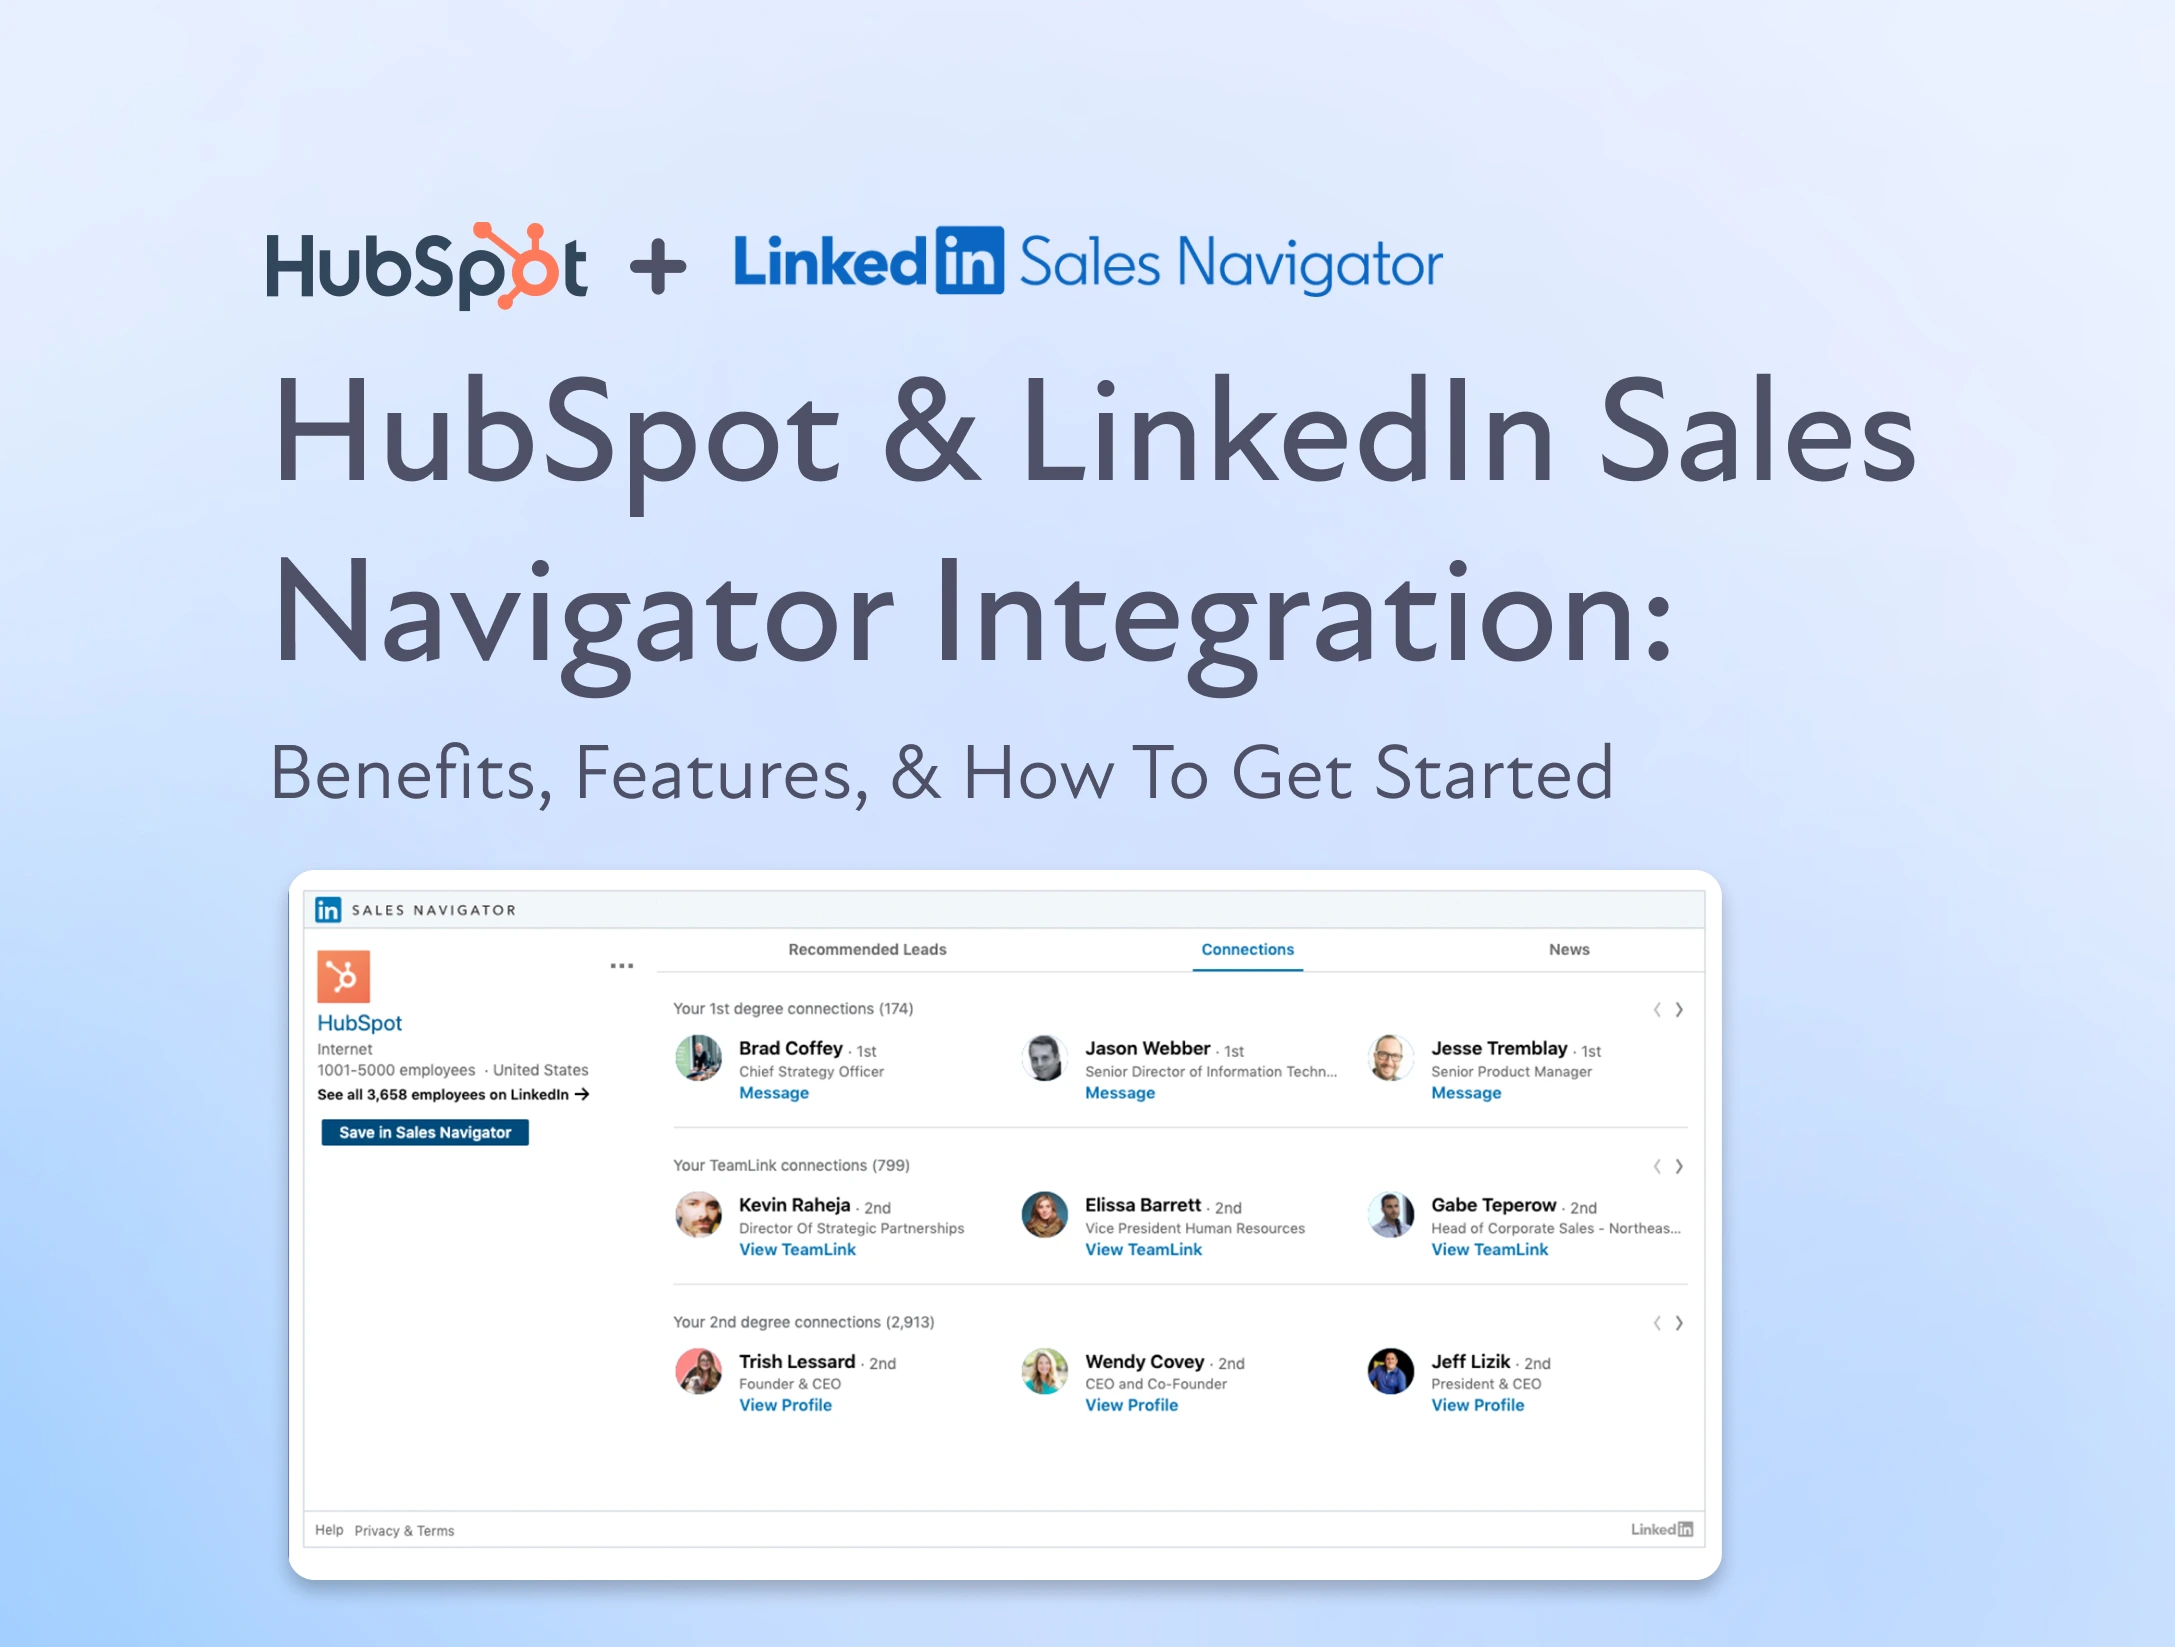 HubSpot and LinkedIn Sales Navigator Integration